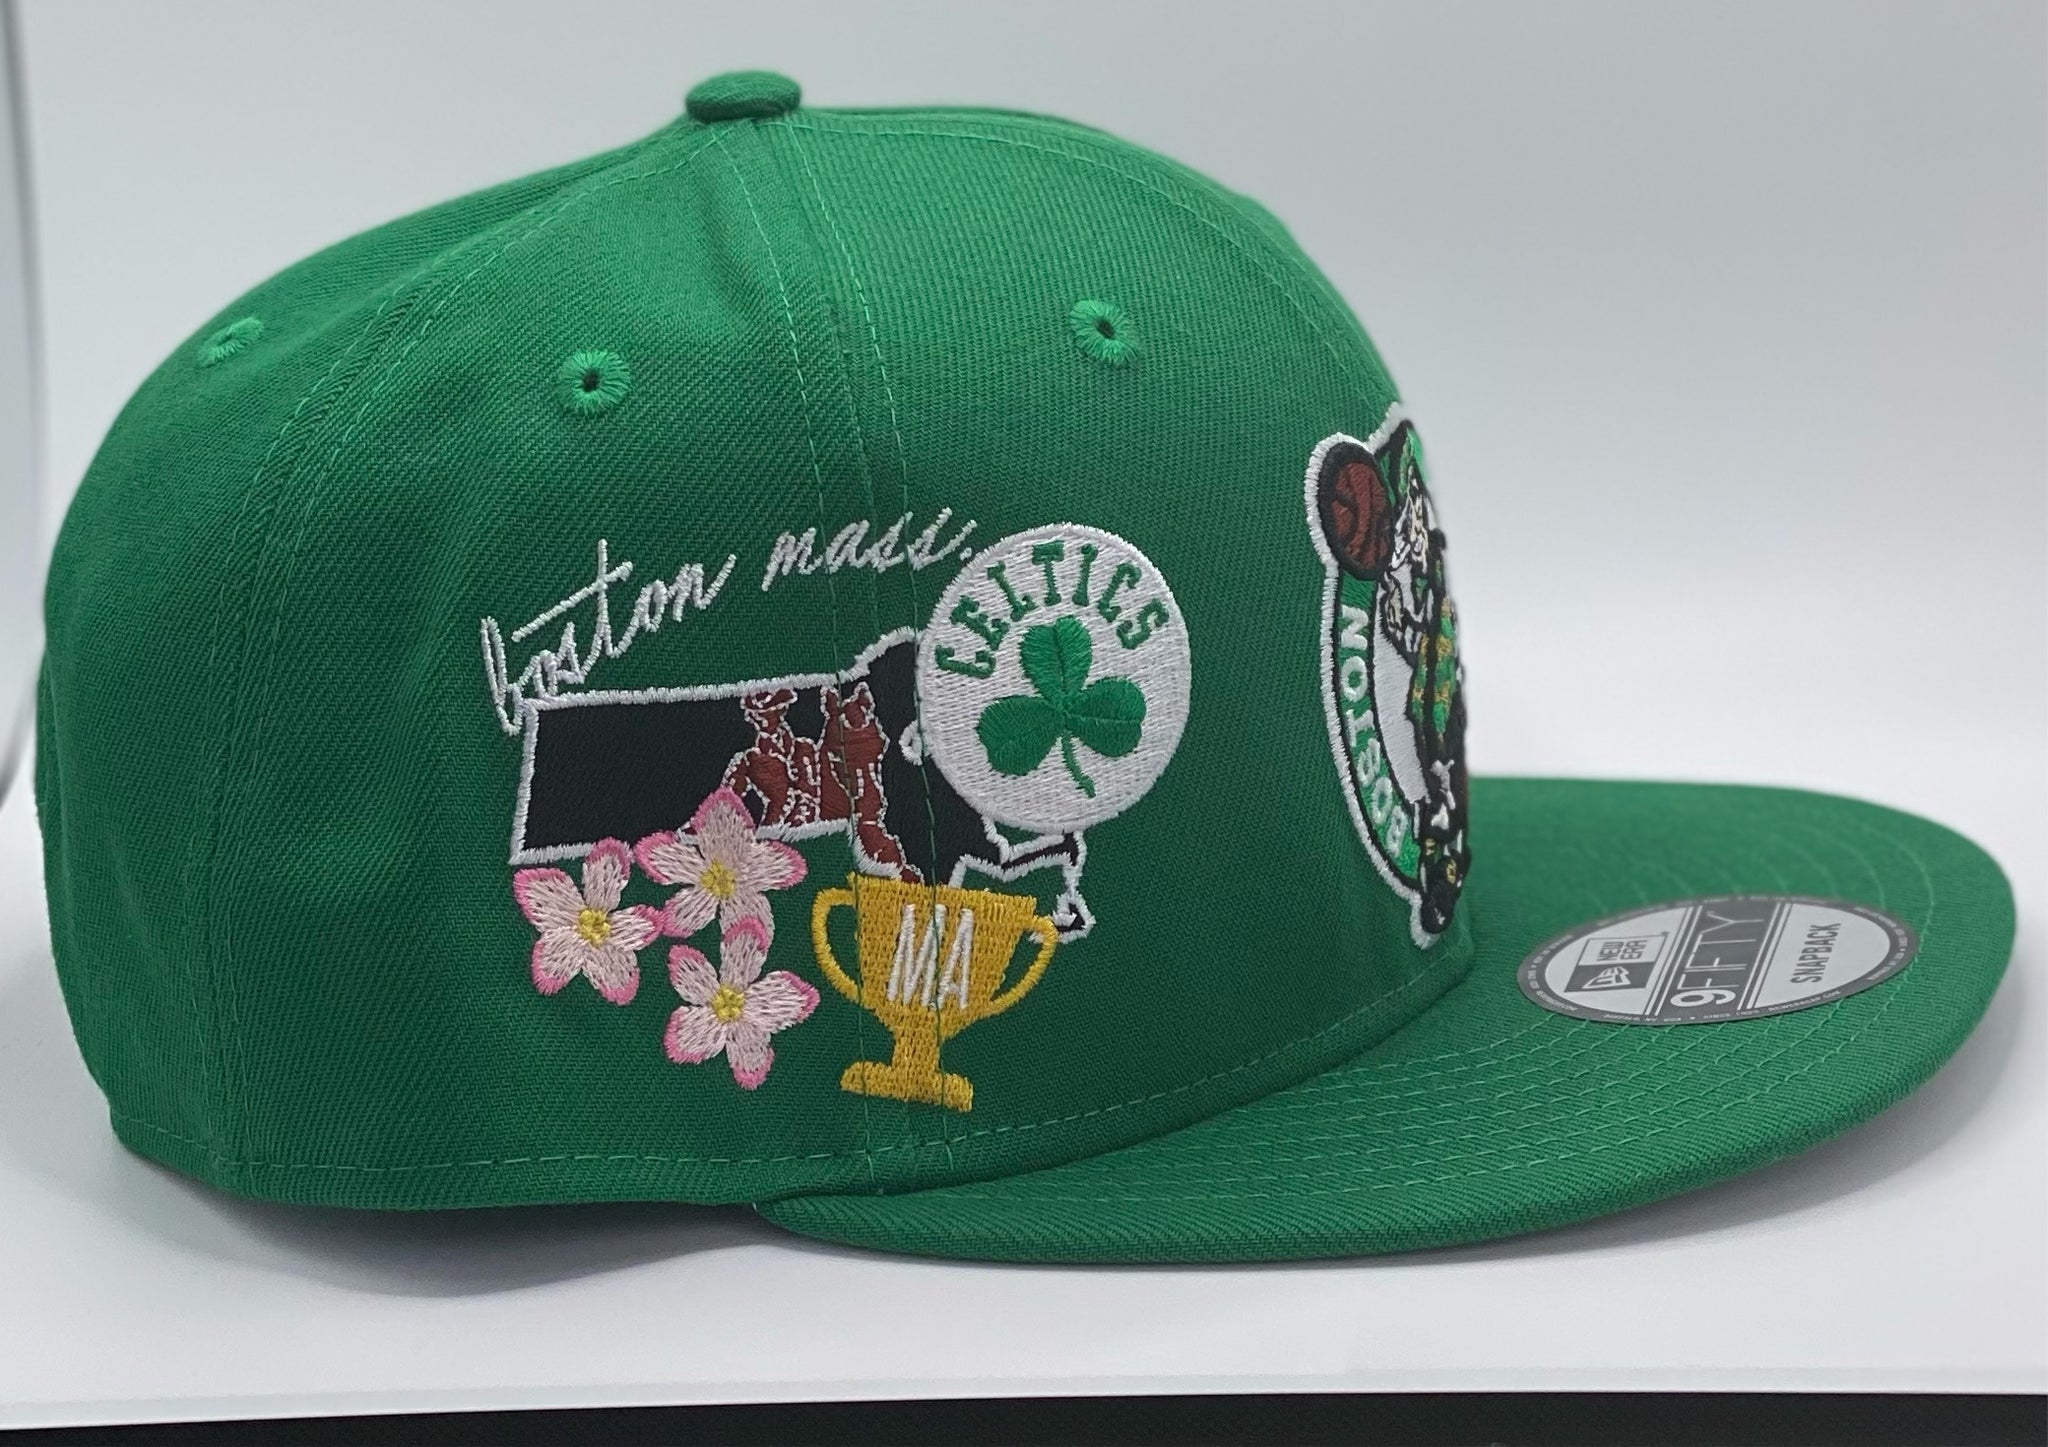 NEW Boston Celtics Baseball Cap Hat Black Green Bill New Era